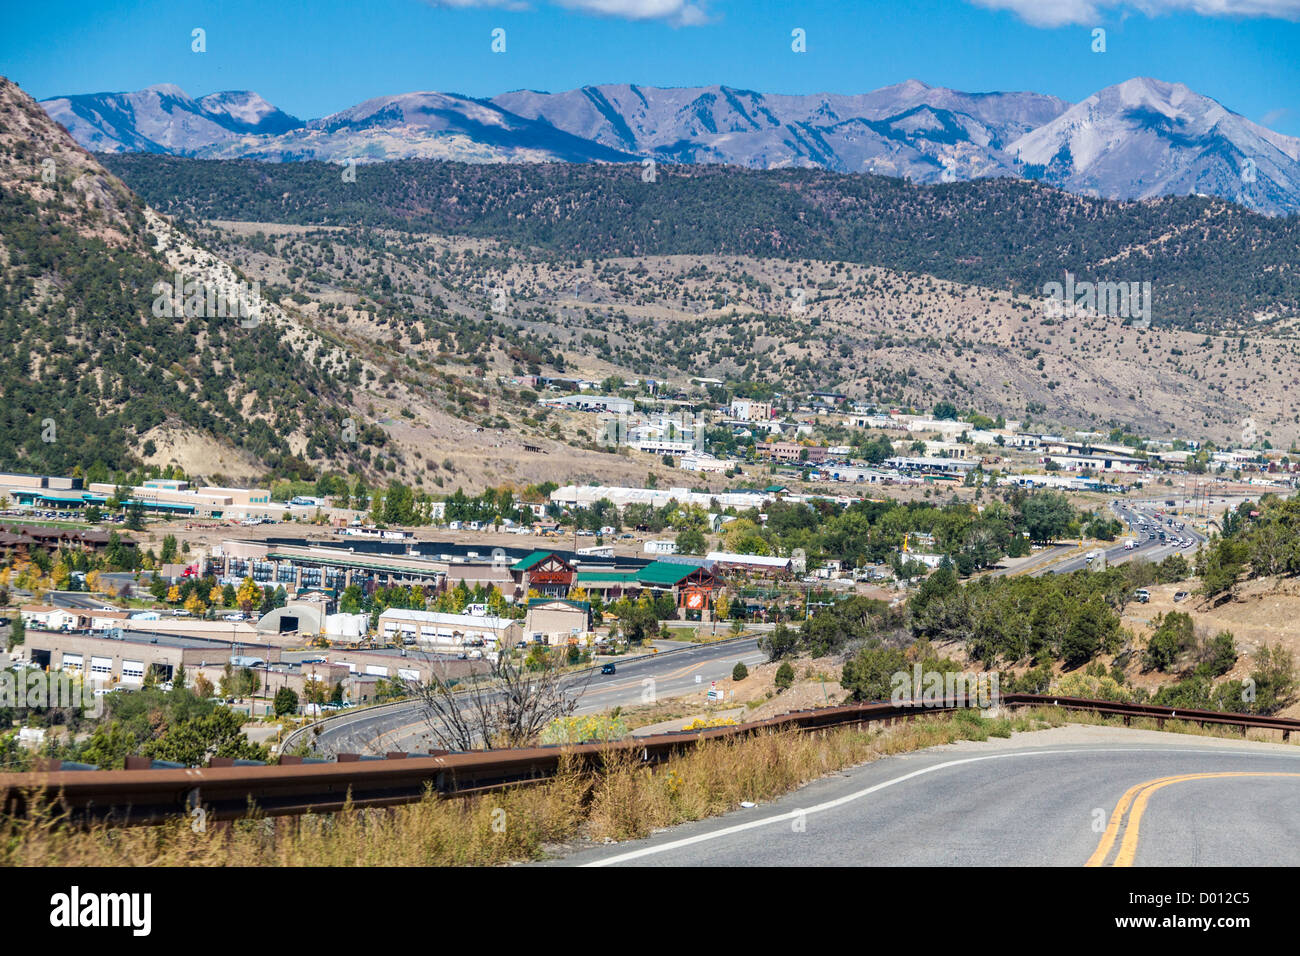 US 550 at Durango, Colorado, with San Juan Mountains in the distance. Stock Photo